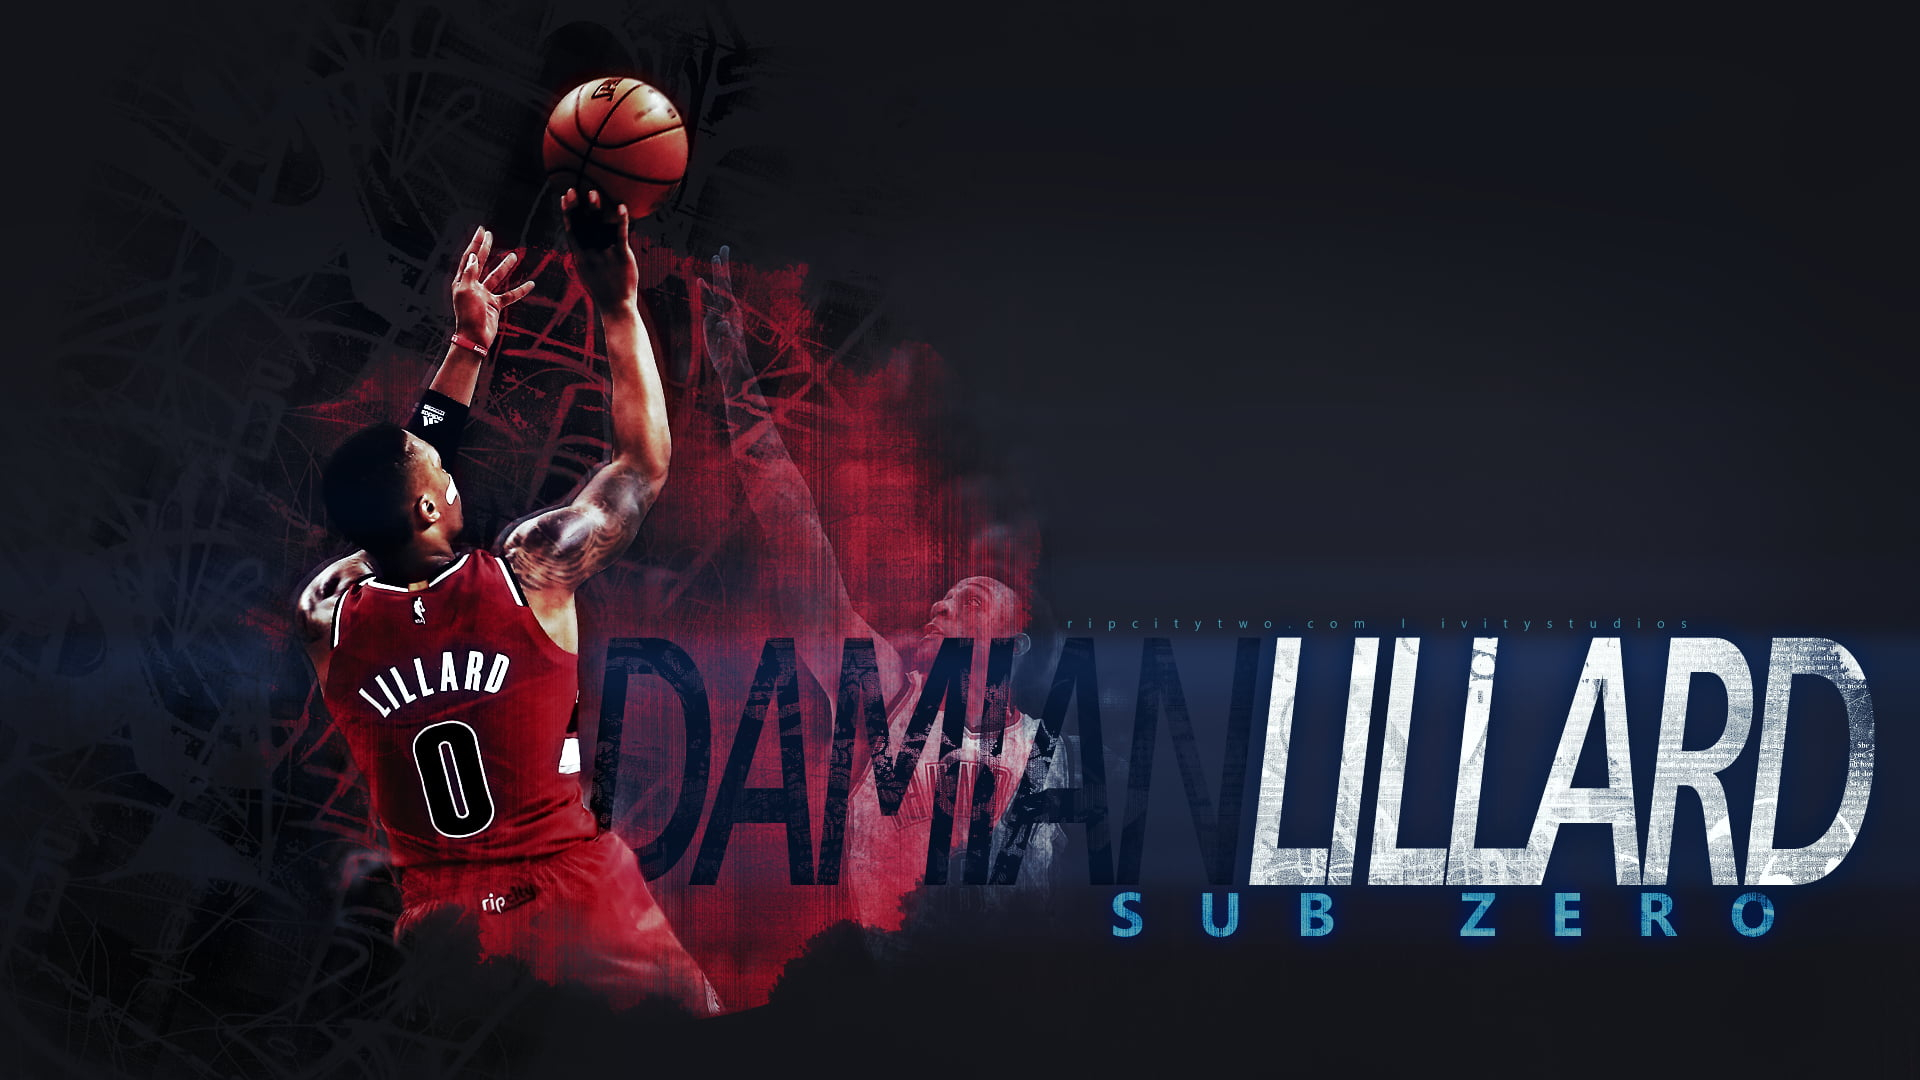 Damian Liliard NBA player illustration wallpaper, Damian Lillard, basketball